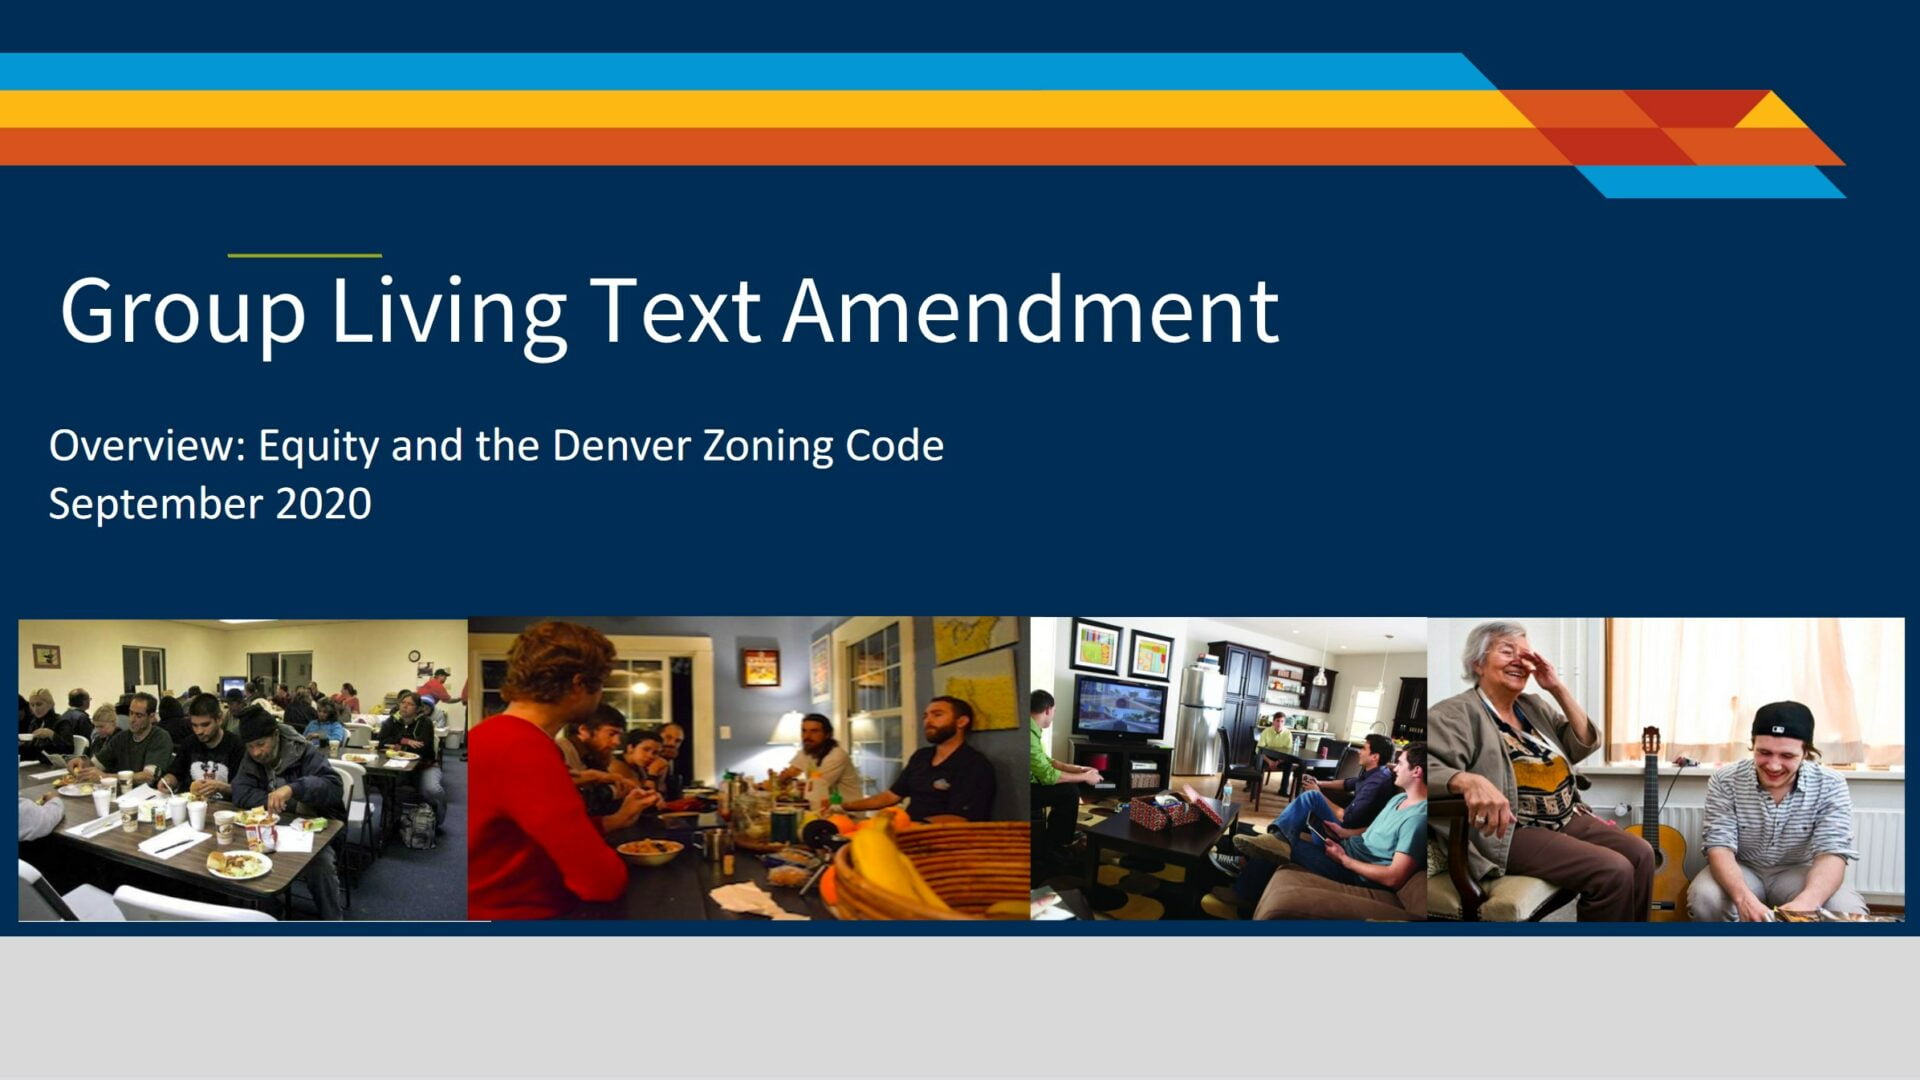 Title card: Group Living Text Amendment